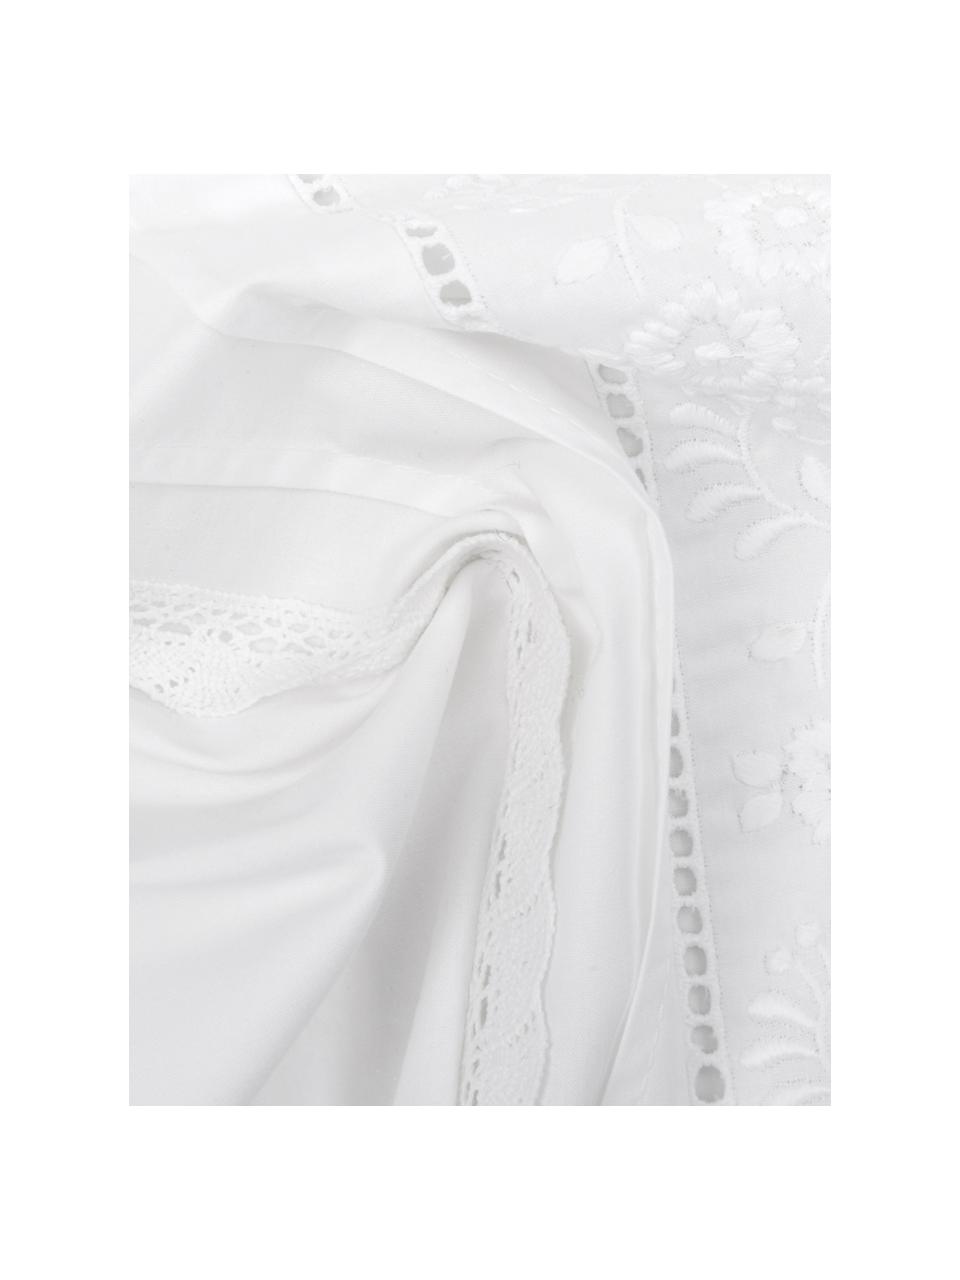 Baumwollperkal-Bettwäsche Avery in Weiß mit Stickerei, Webart: Perkal Fadendichte 200 TC, Weiß, 200 x 200 cm + 2 Kissen 80 x 80 cm